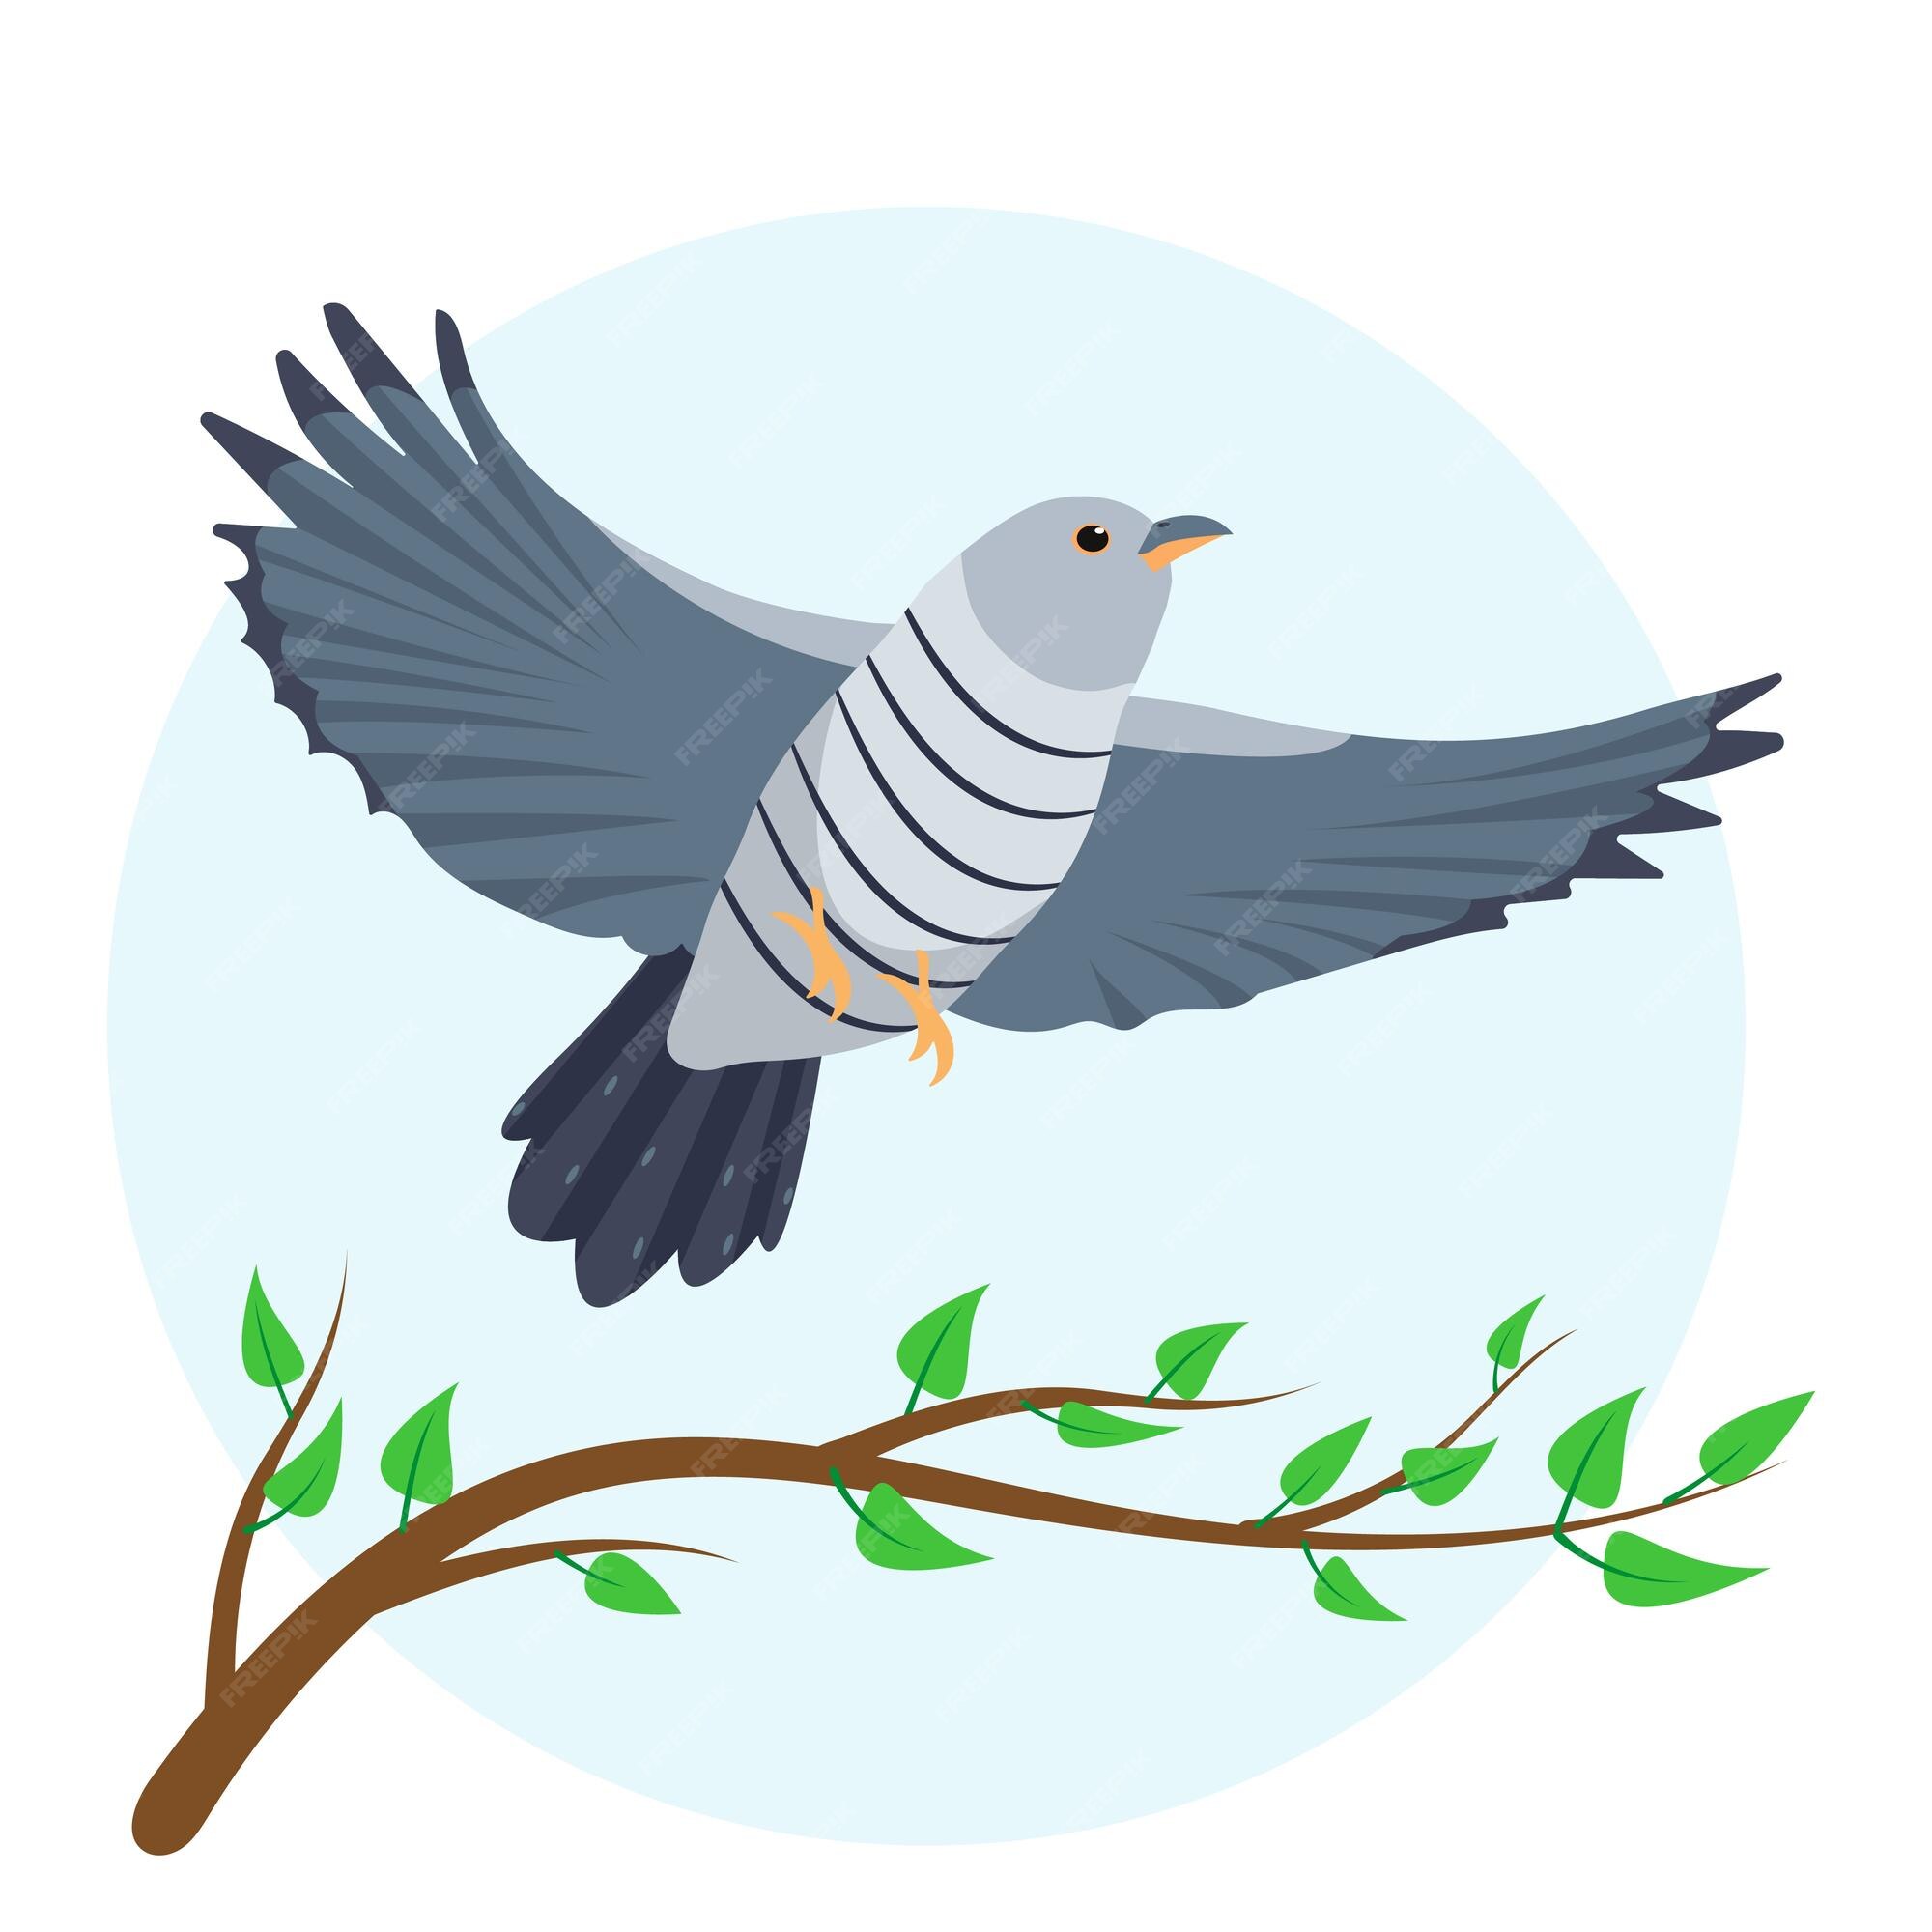 Premium Vector | Grey cuckoo bird flying in sky isolated on white